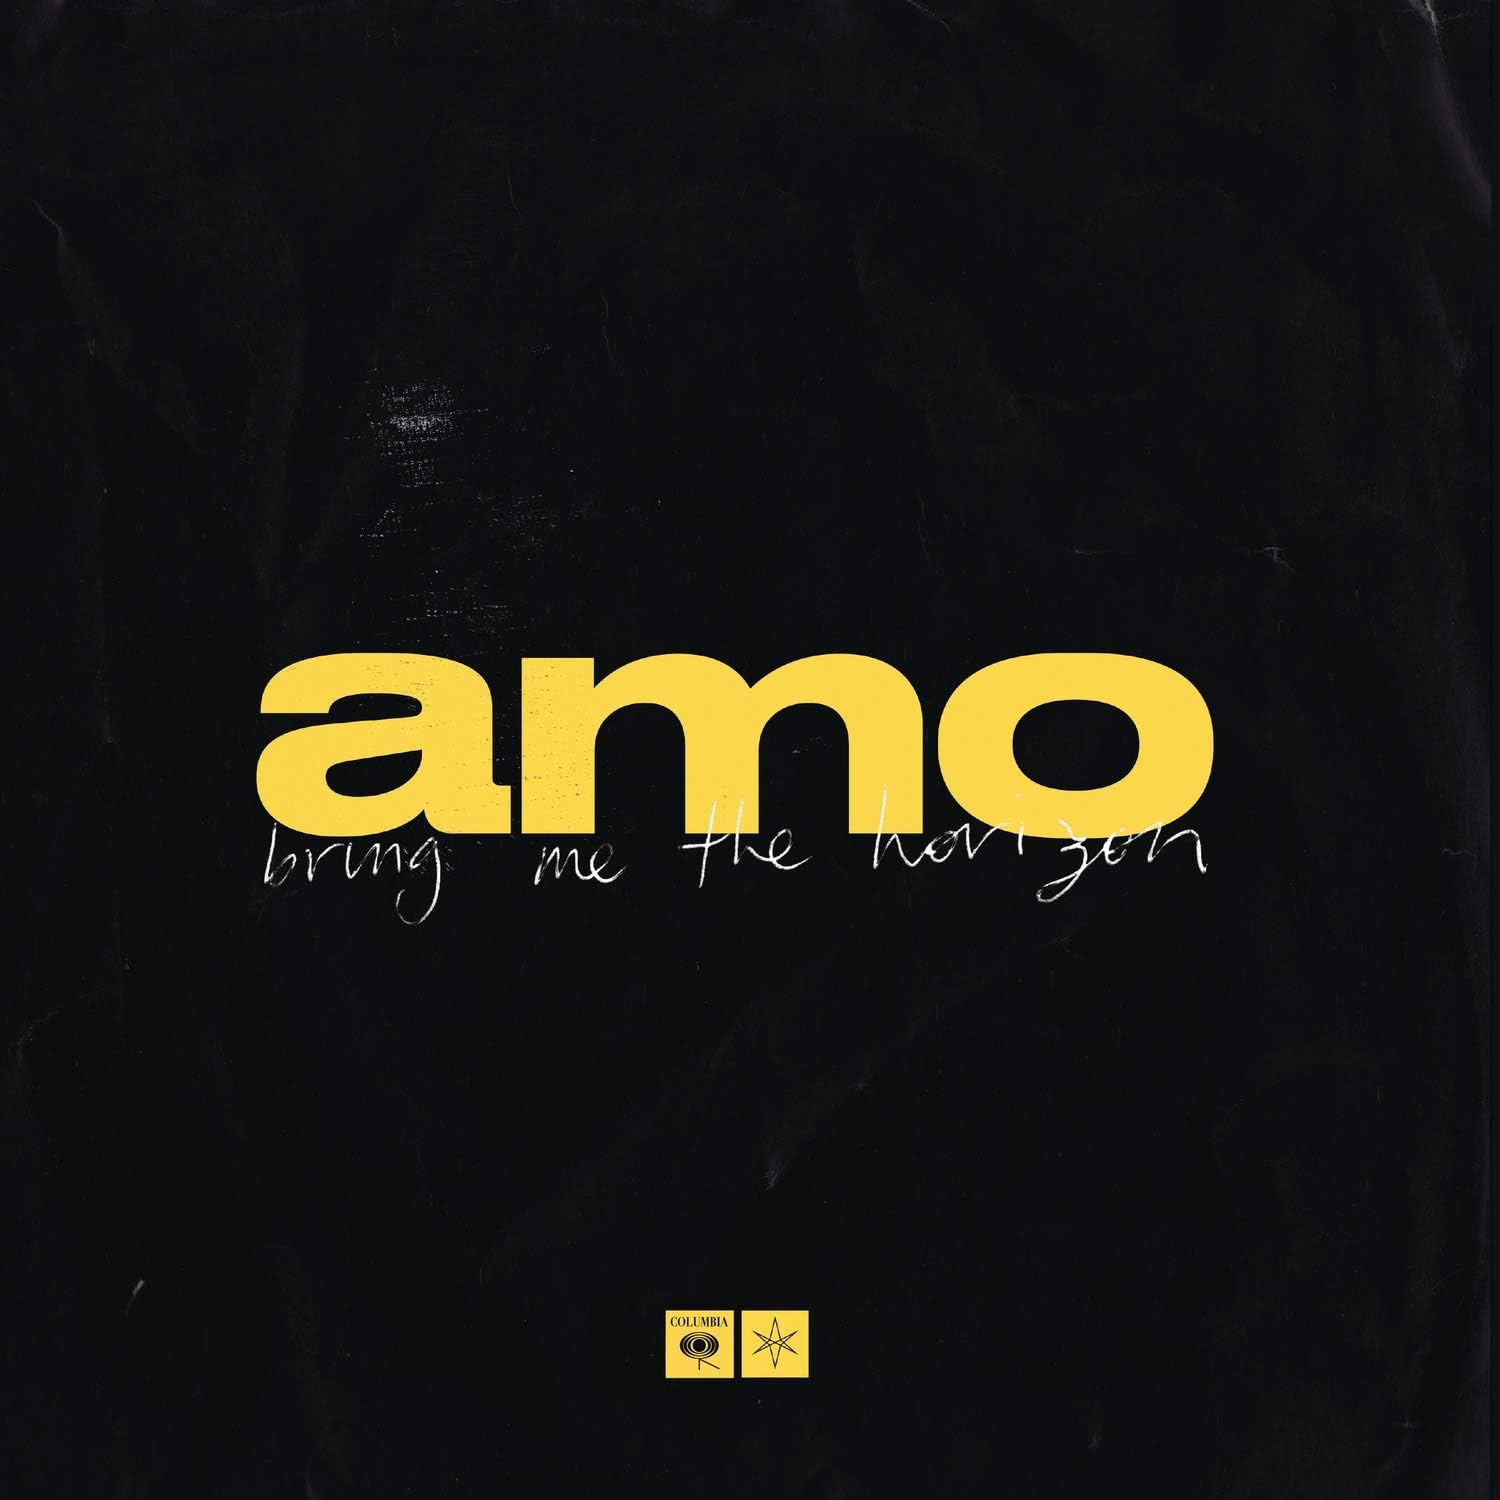 Bring Me The Horizon "Amo" Vinyl